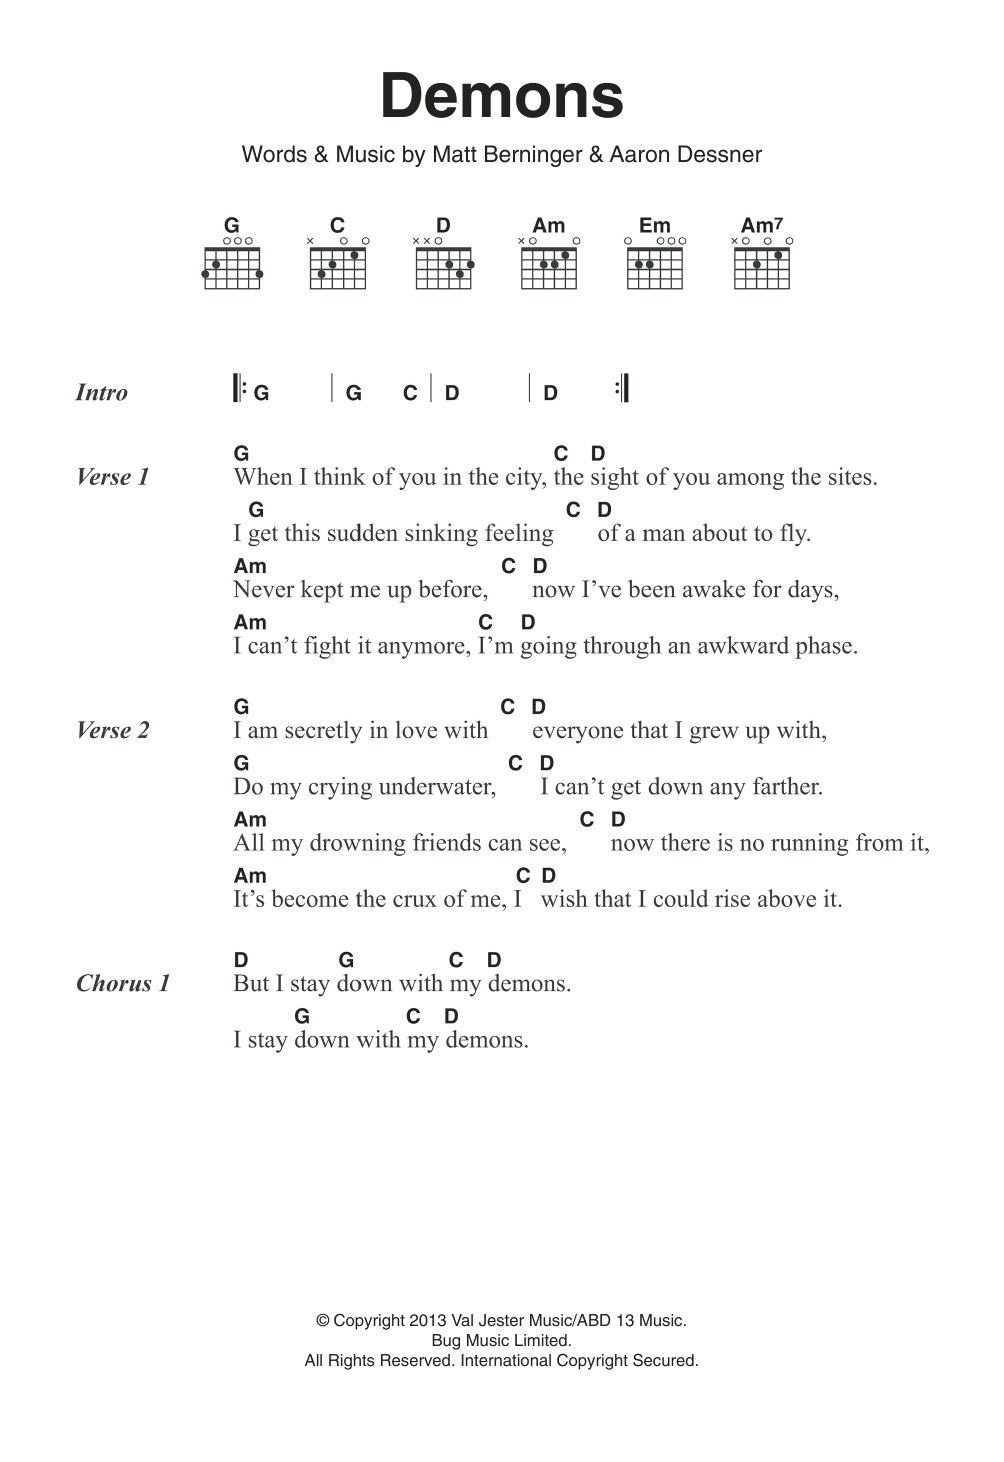 The National Demons Sheet Music Notes & Chords for Guitar Chords/Lyrics - Download or Print PDF